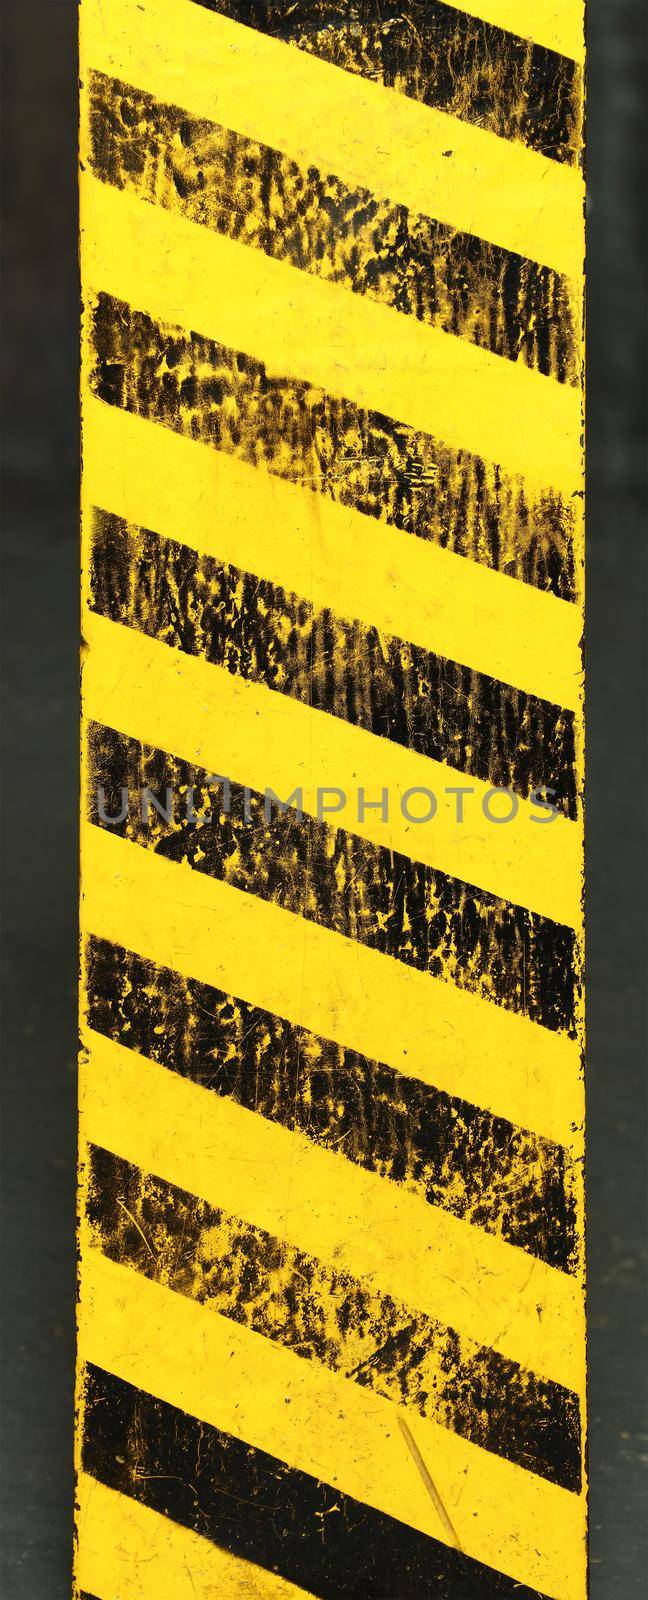 Yellow background with black grunge hazard sign by BreakingTheWalls